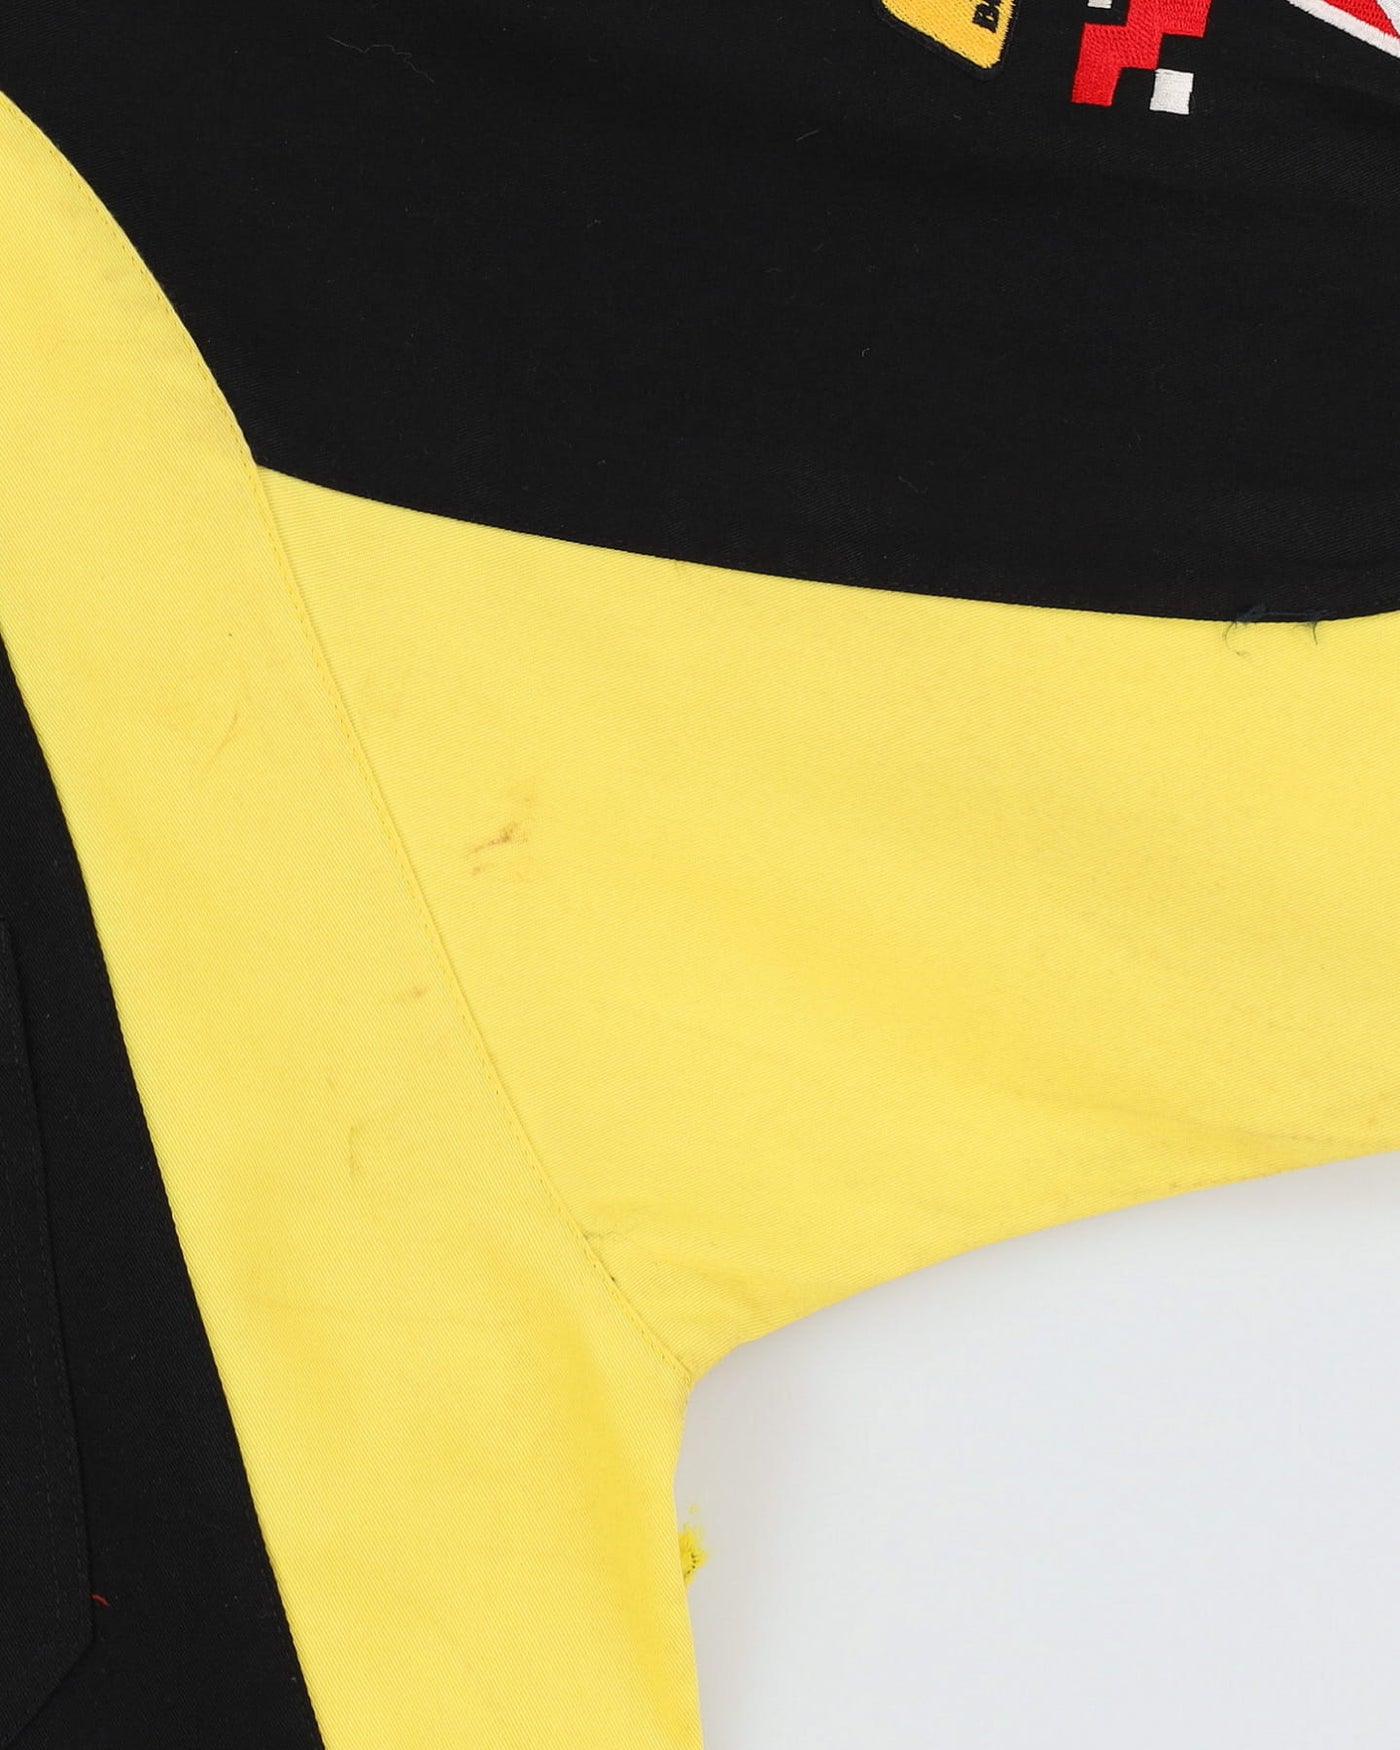 Vintage 90s Deadstock With Tags Jordan Racing F1 Black / Yellow Short Sleeve Shirt - XL